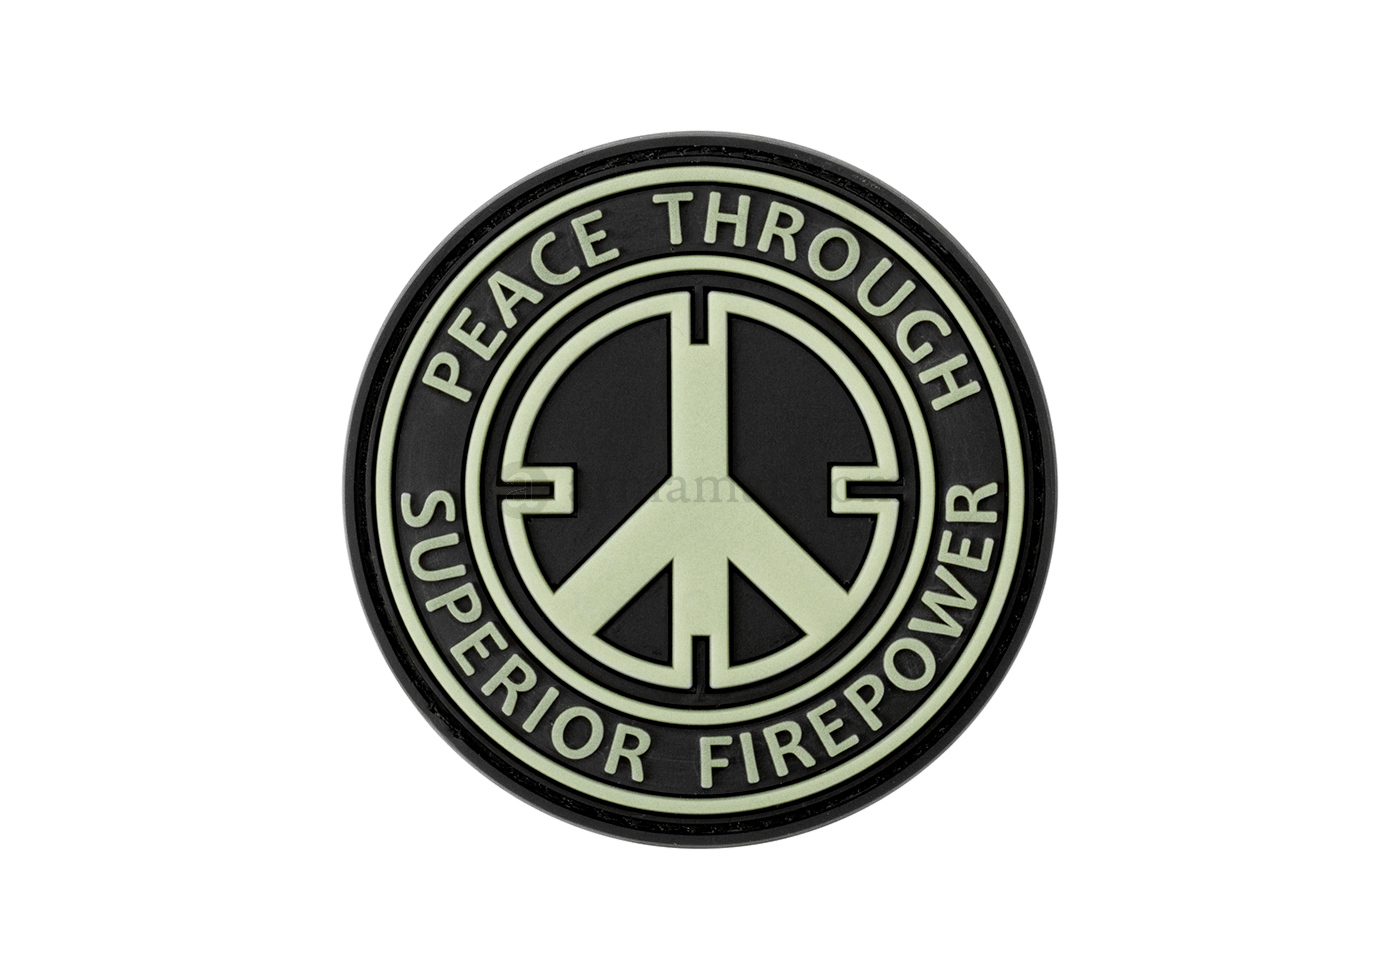 Patch JTG "Peace through superior firepower", rubber, glow in the dark